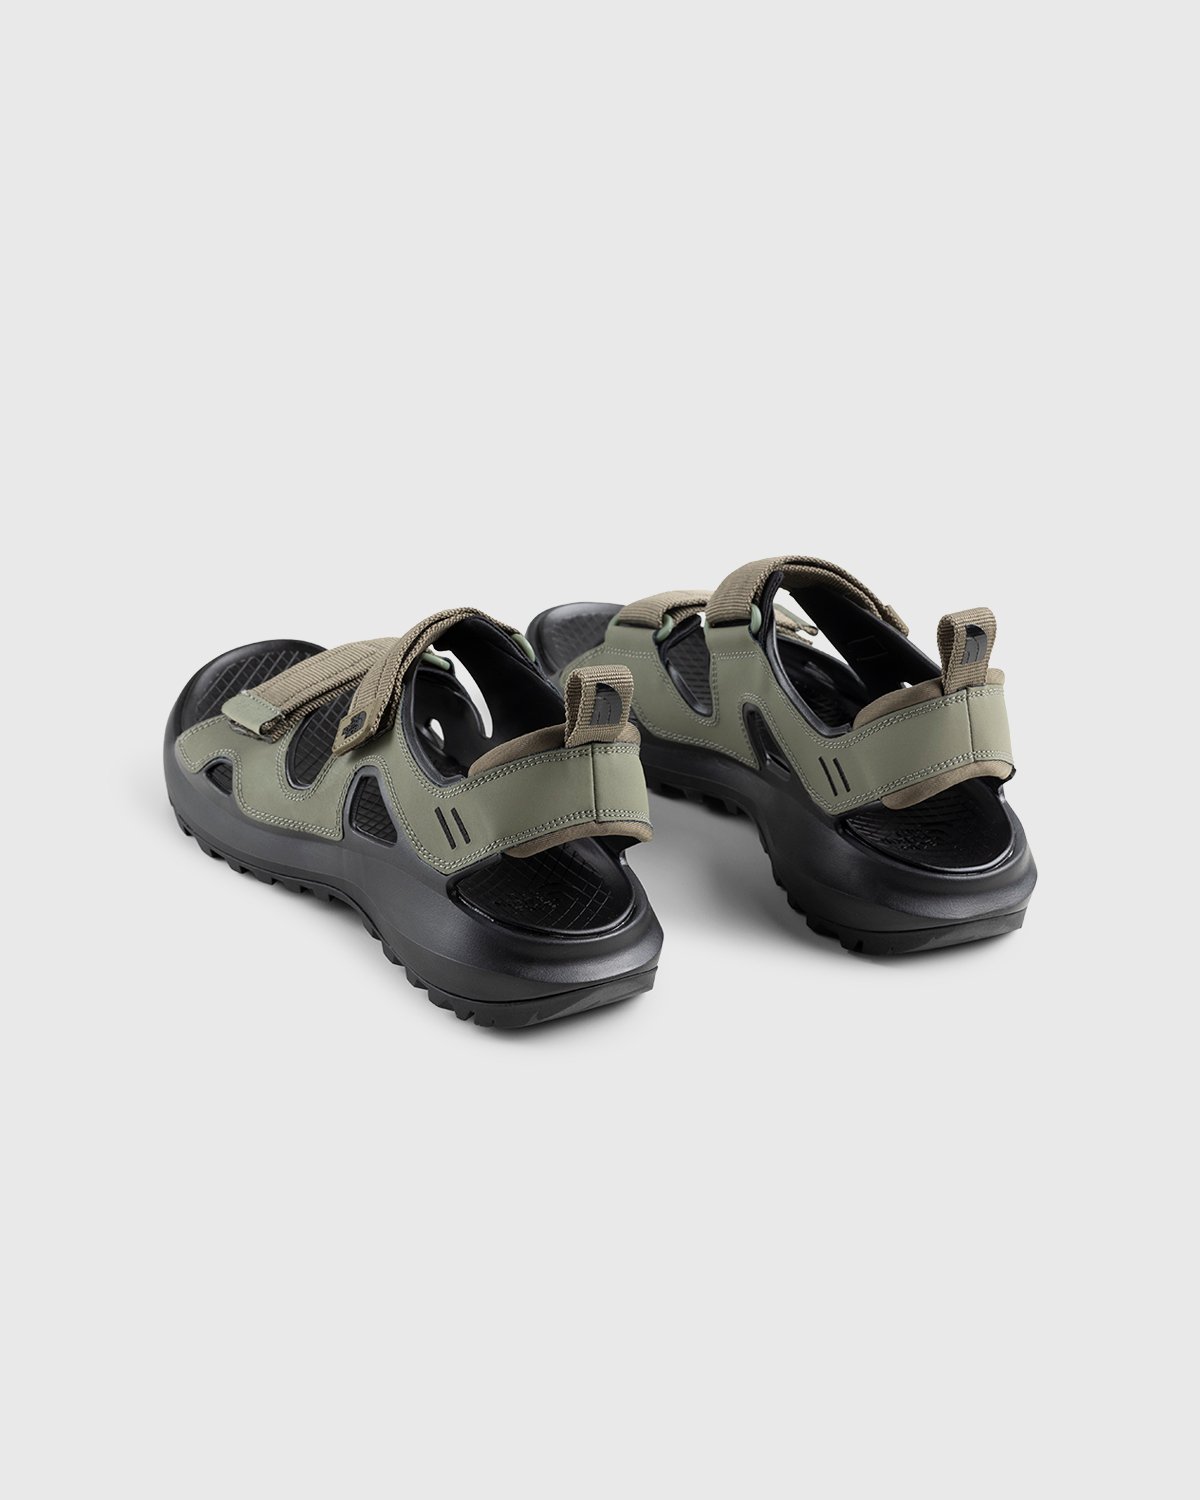 The North Face - Hedgehog Sandal III Burnt Olive Green/Black - Footwear - Green - Image 5